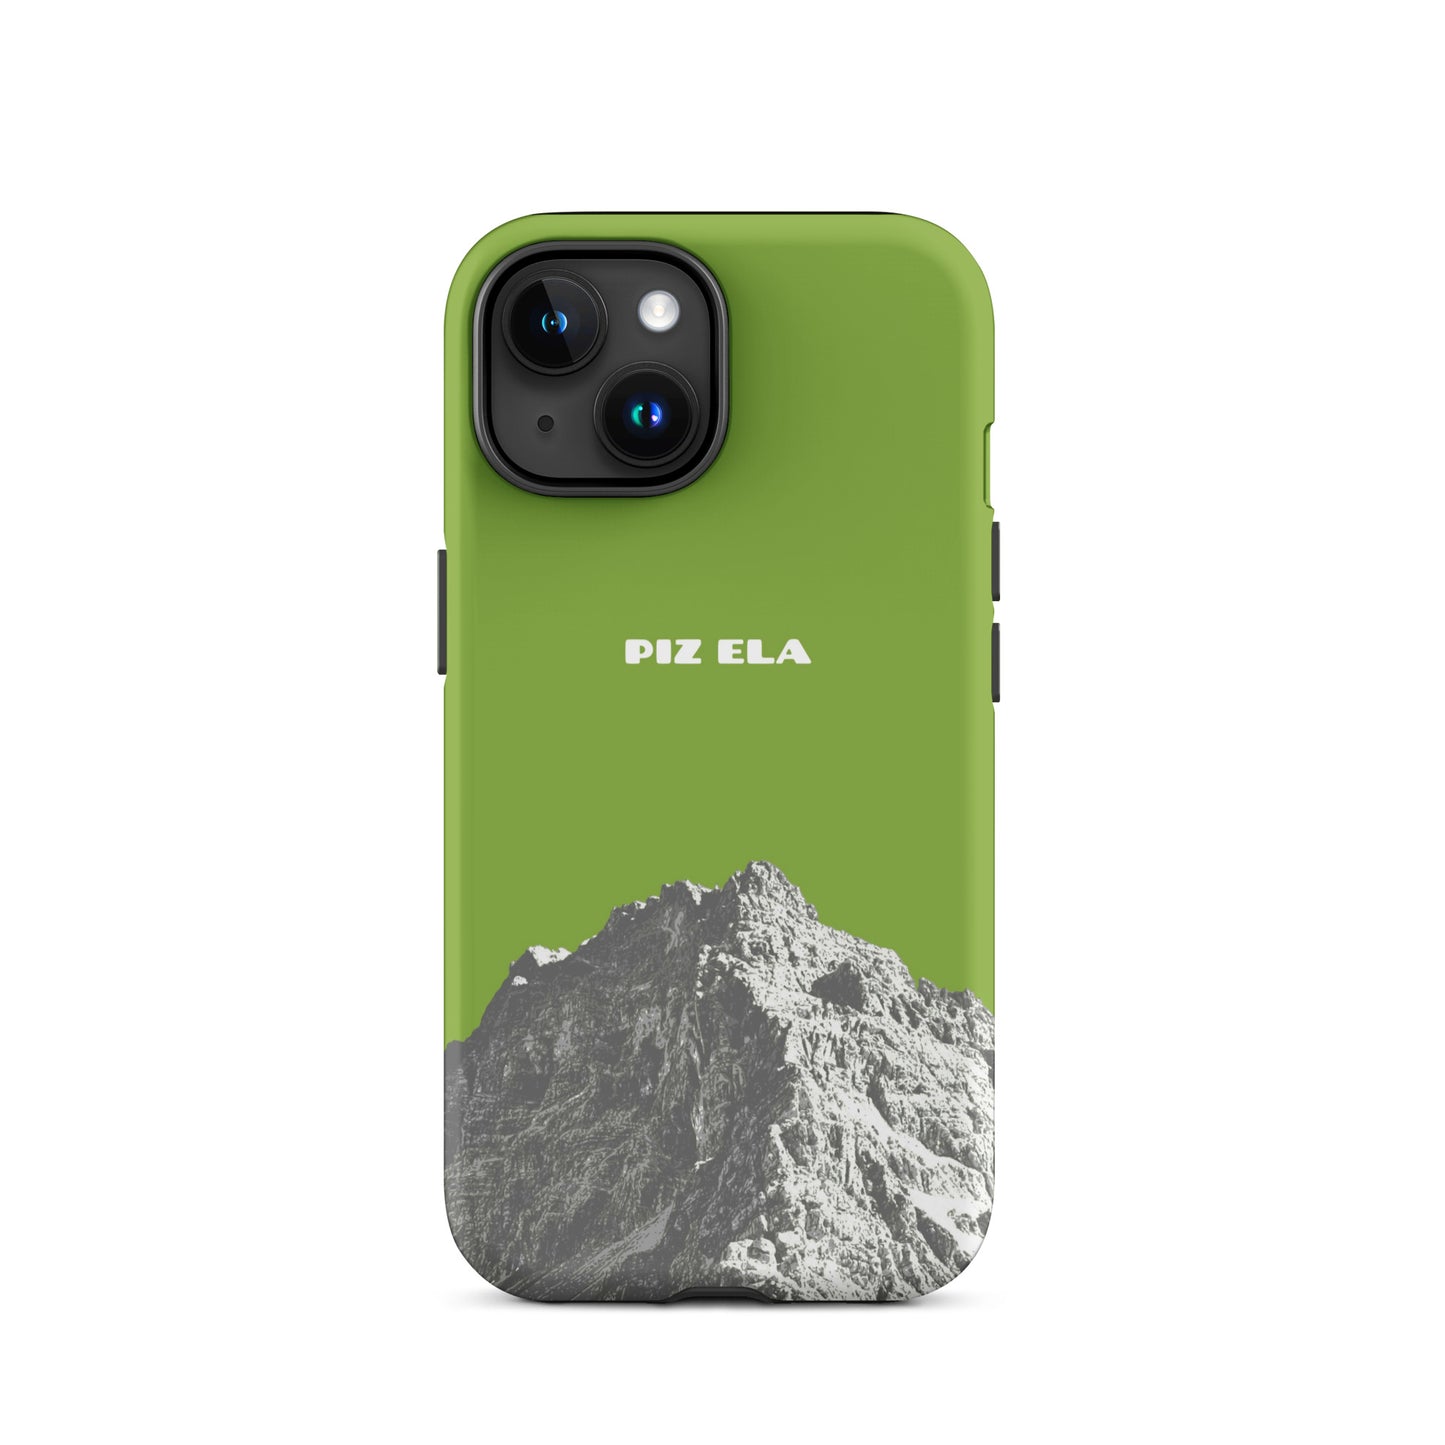 iPhone Case - Piz Ela - Gelbgrün